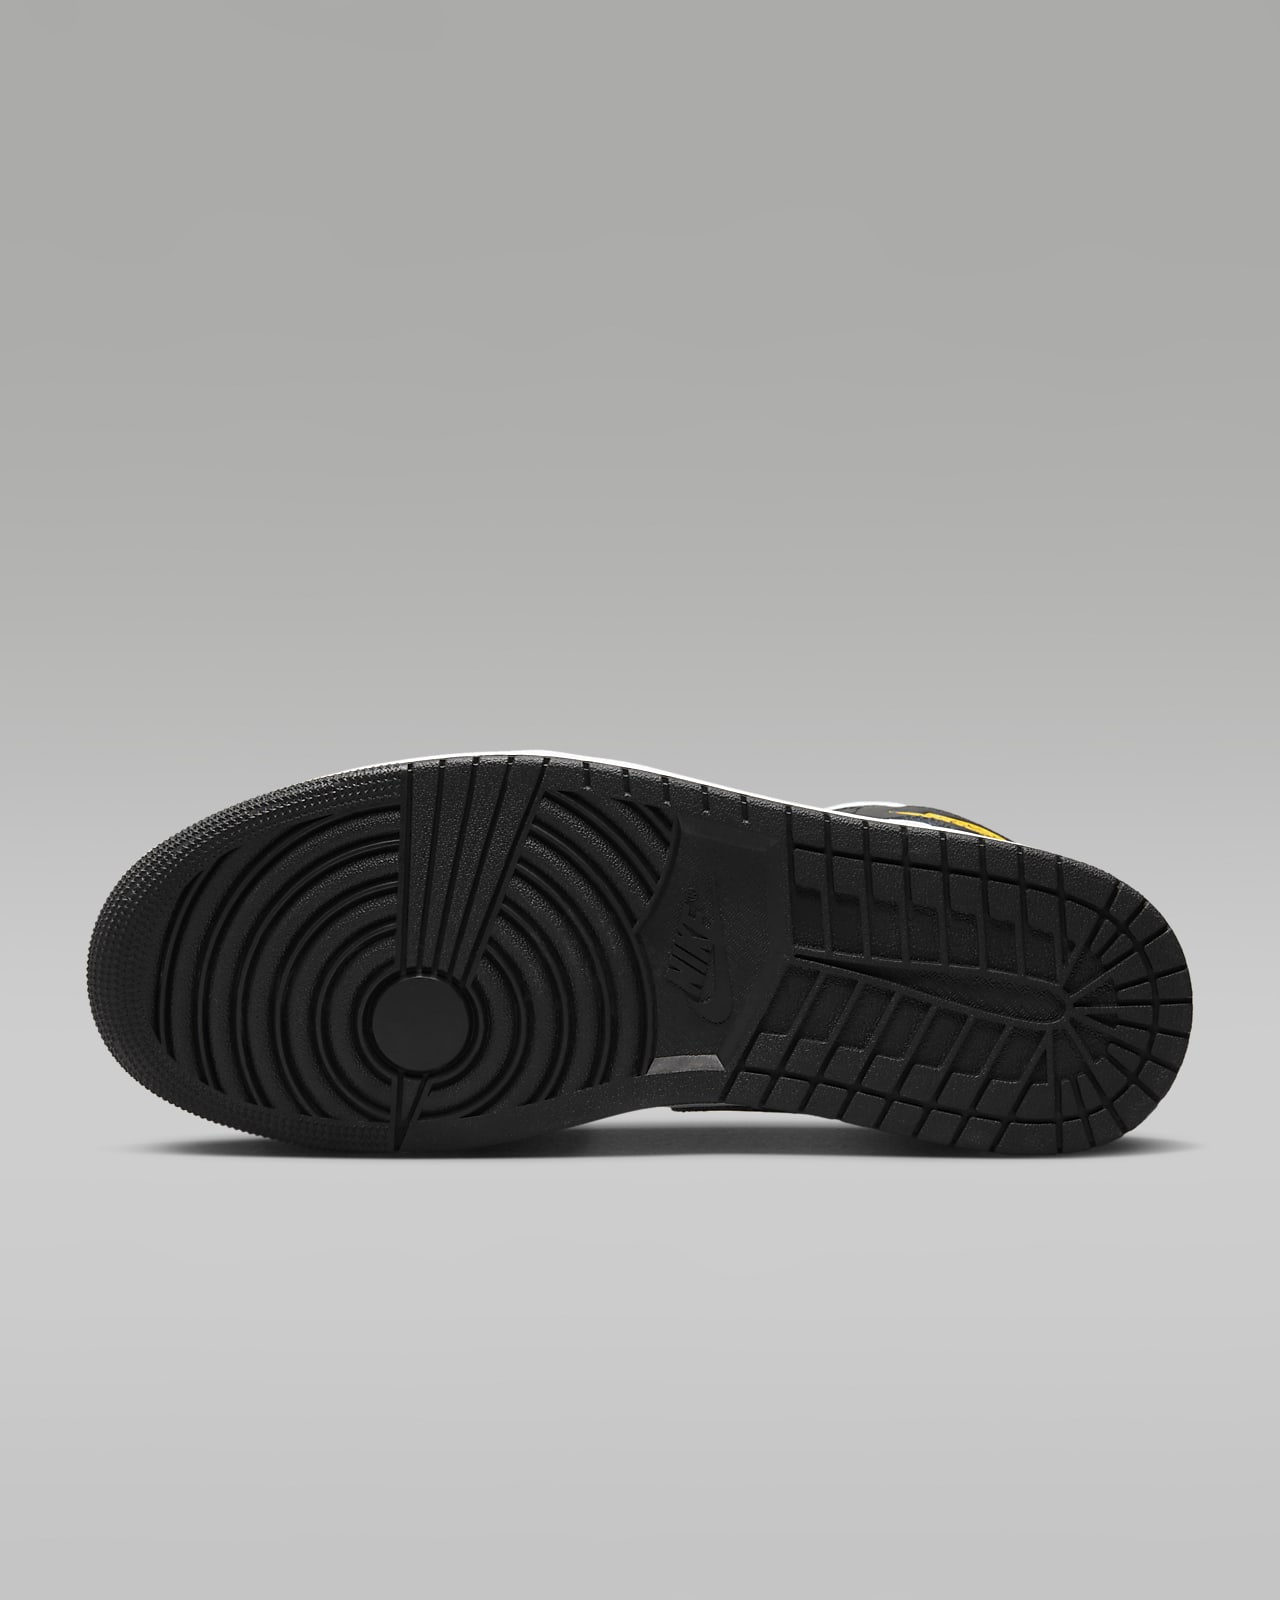 Chaussures Nike Jordan 1 Mid pour homme